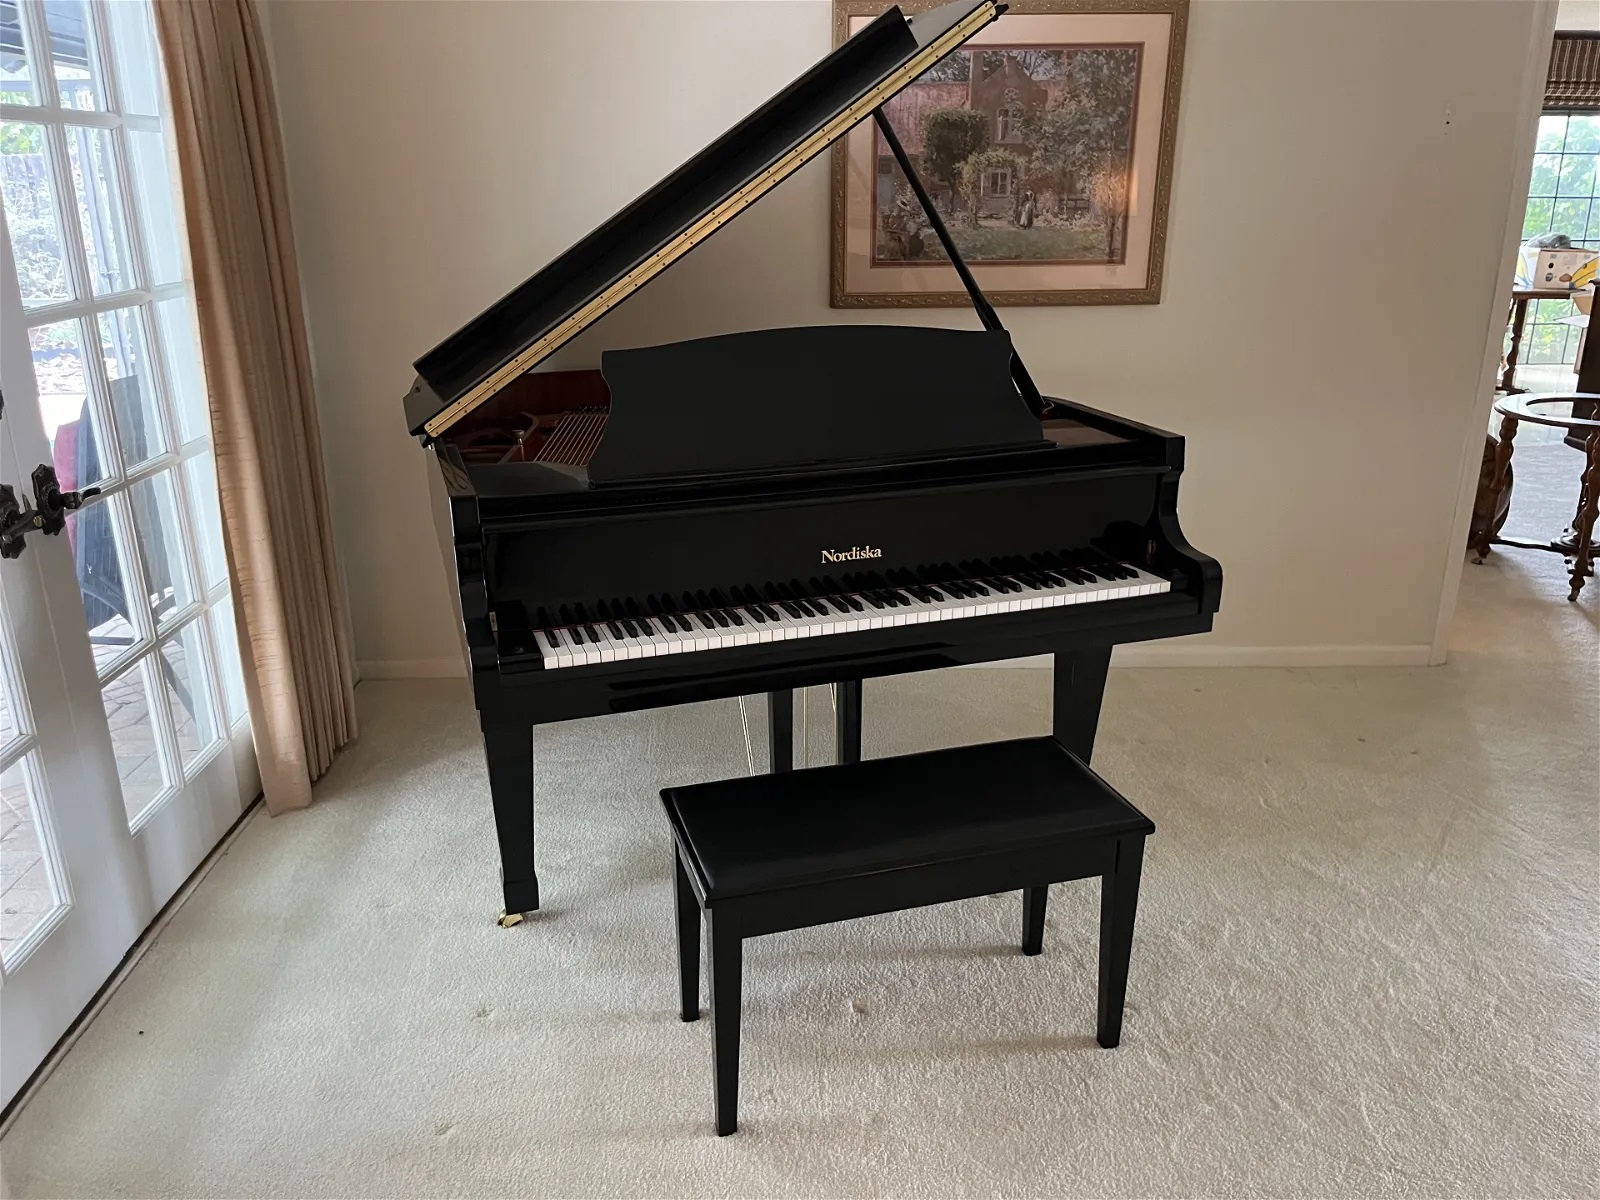 Nordiska 5' glossy black baby Grand Piano